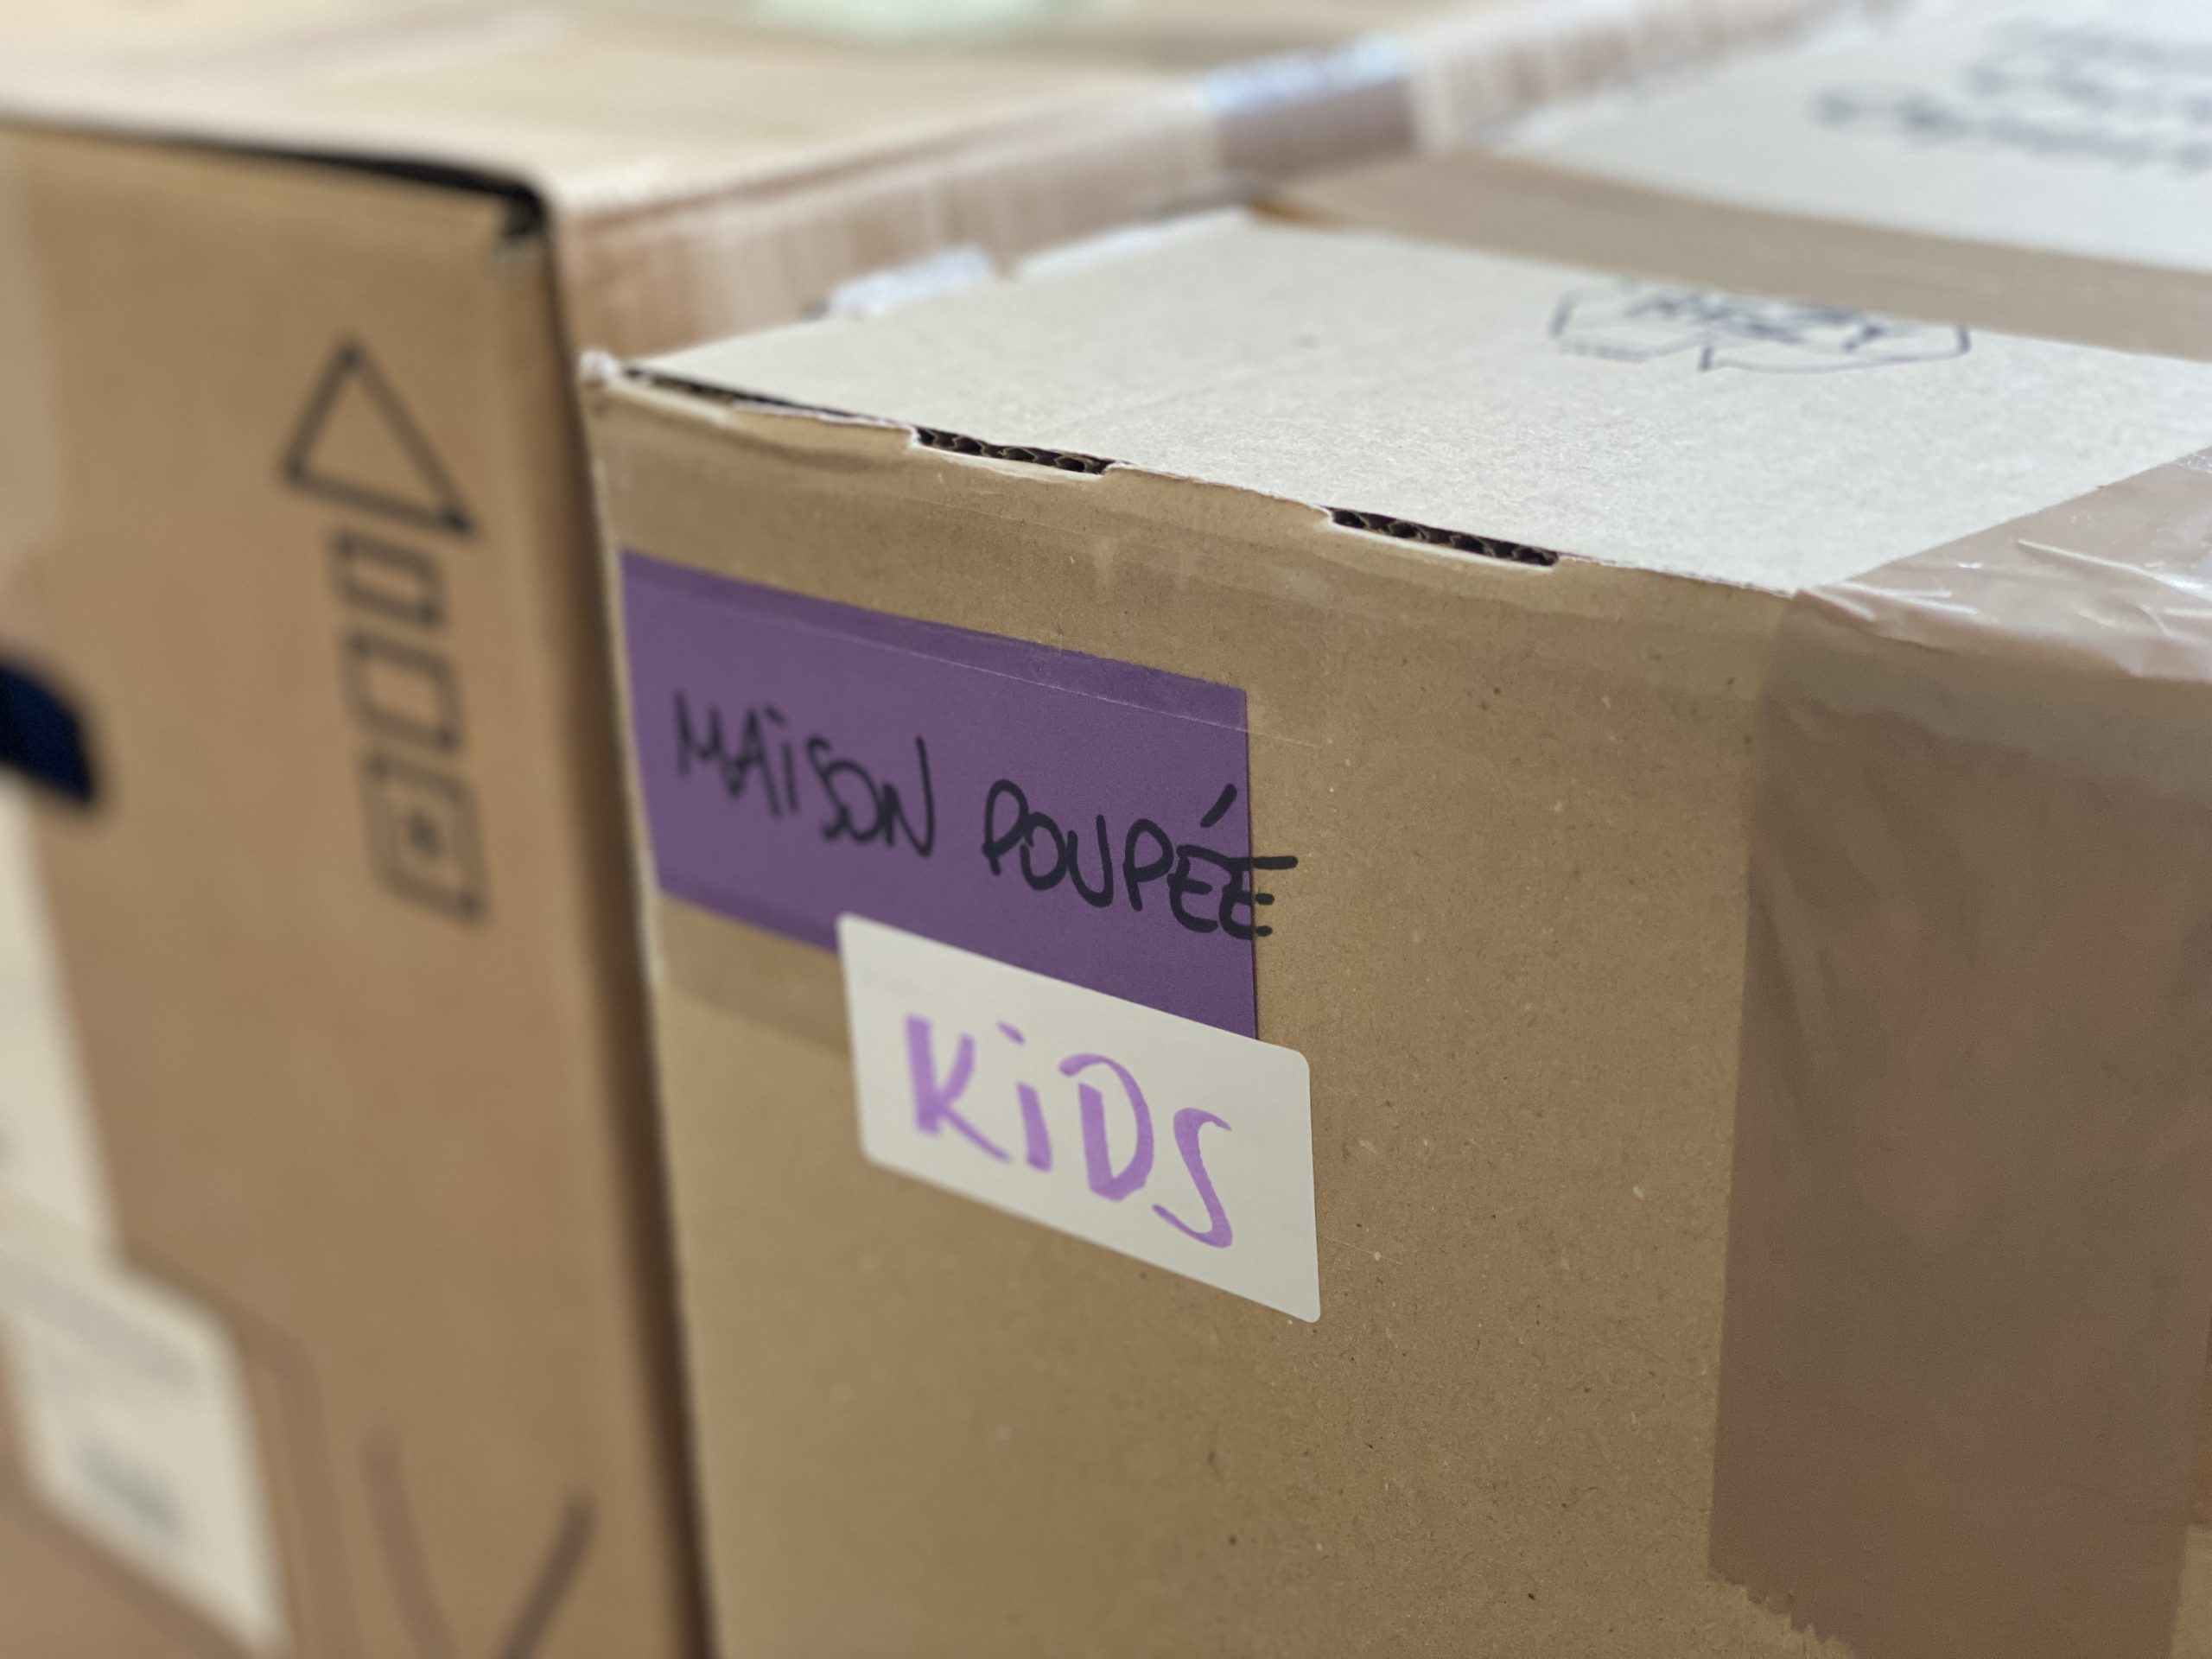 déménagement carton box déménager organisation marie kondo